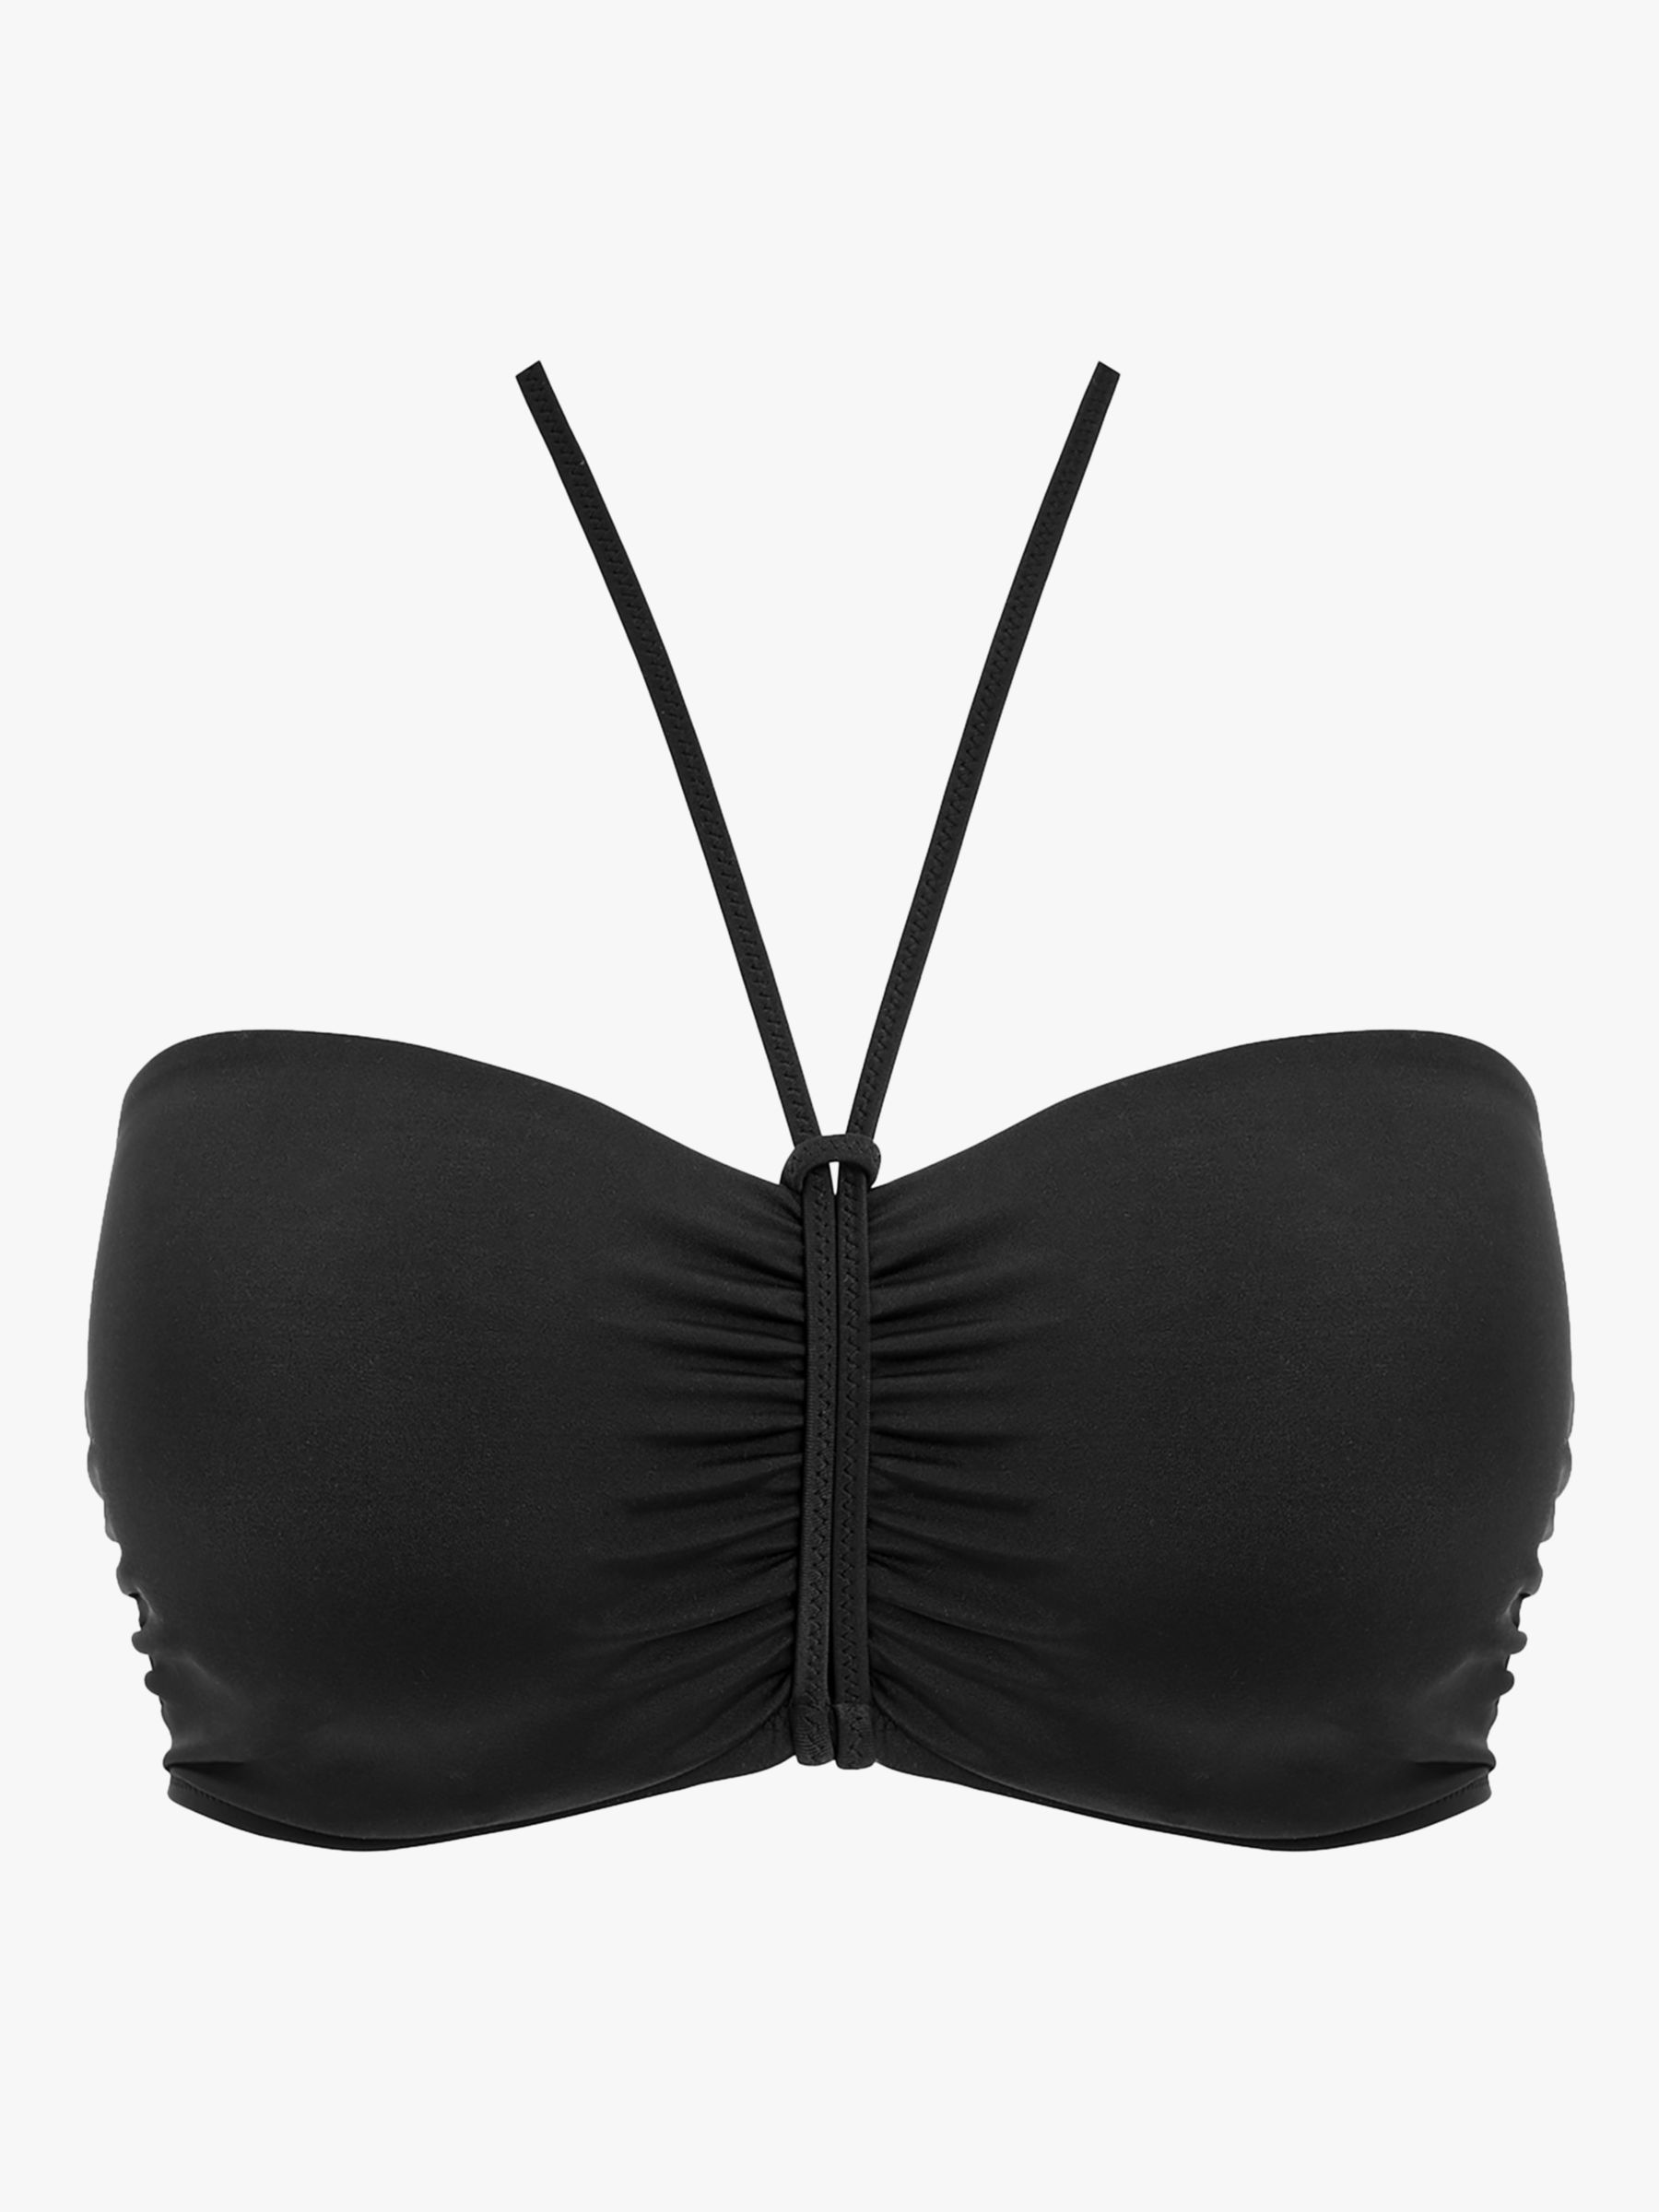 Freya Jewel Cove Plain Underwired Bandeau Bikini Top, Black, 32DD